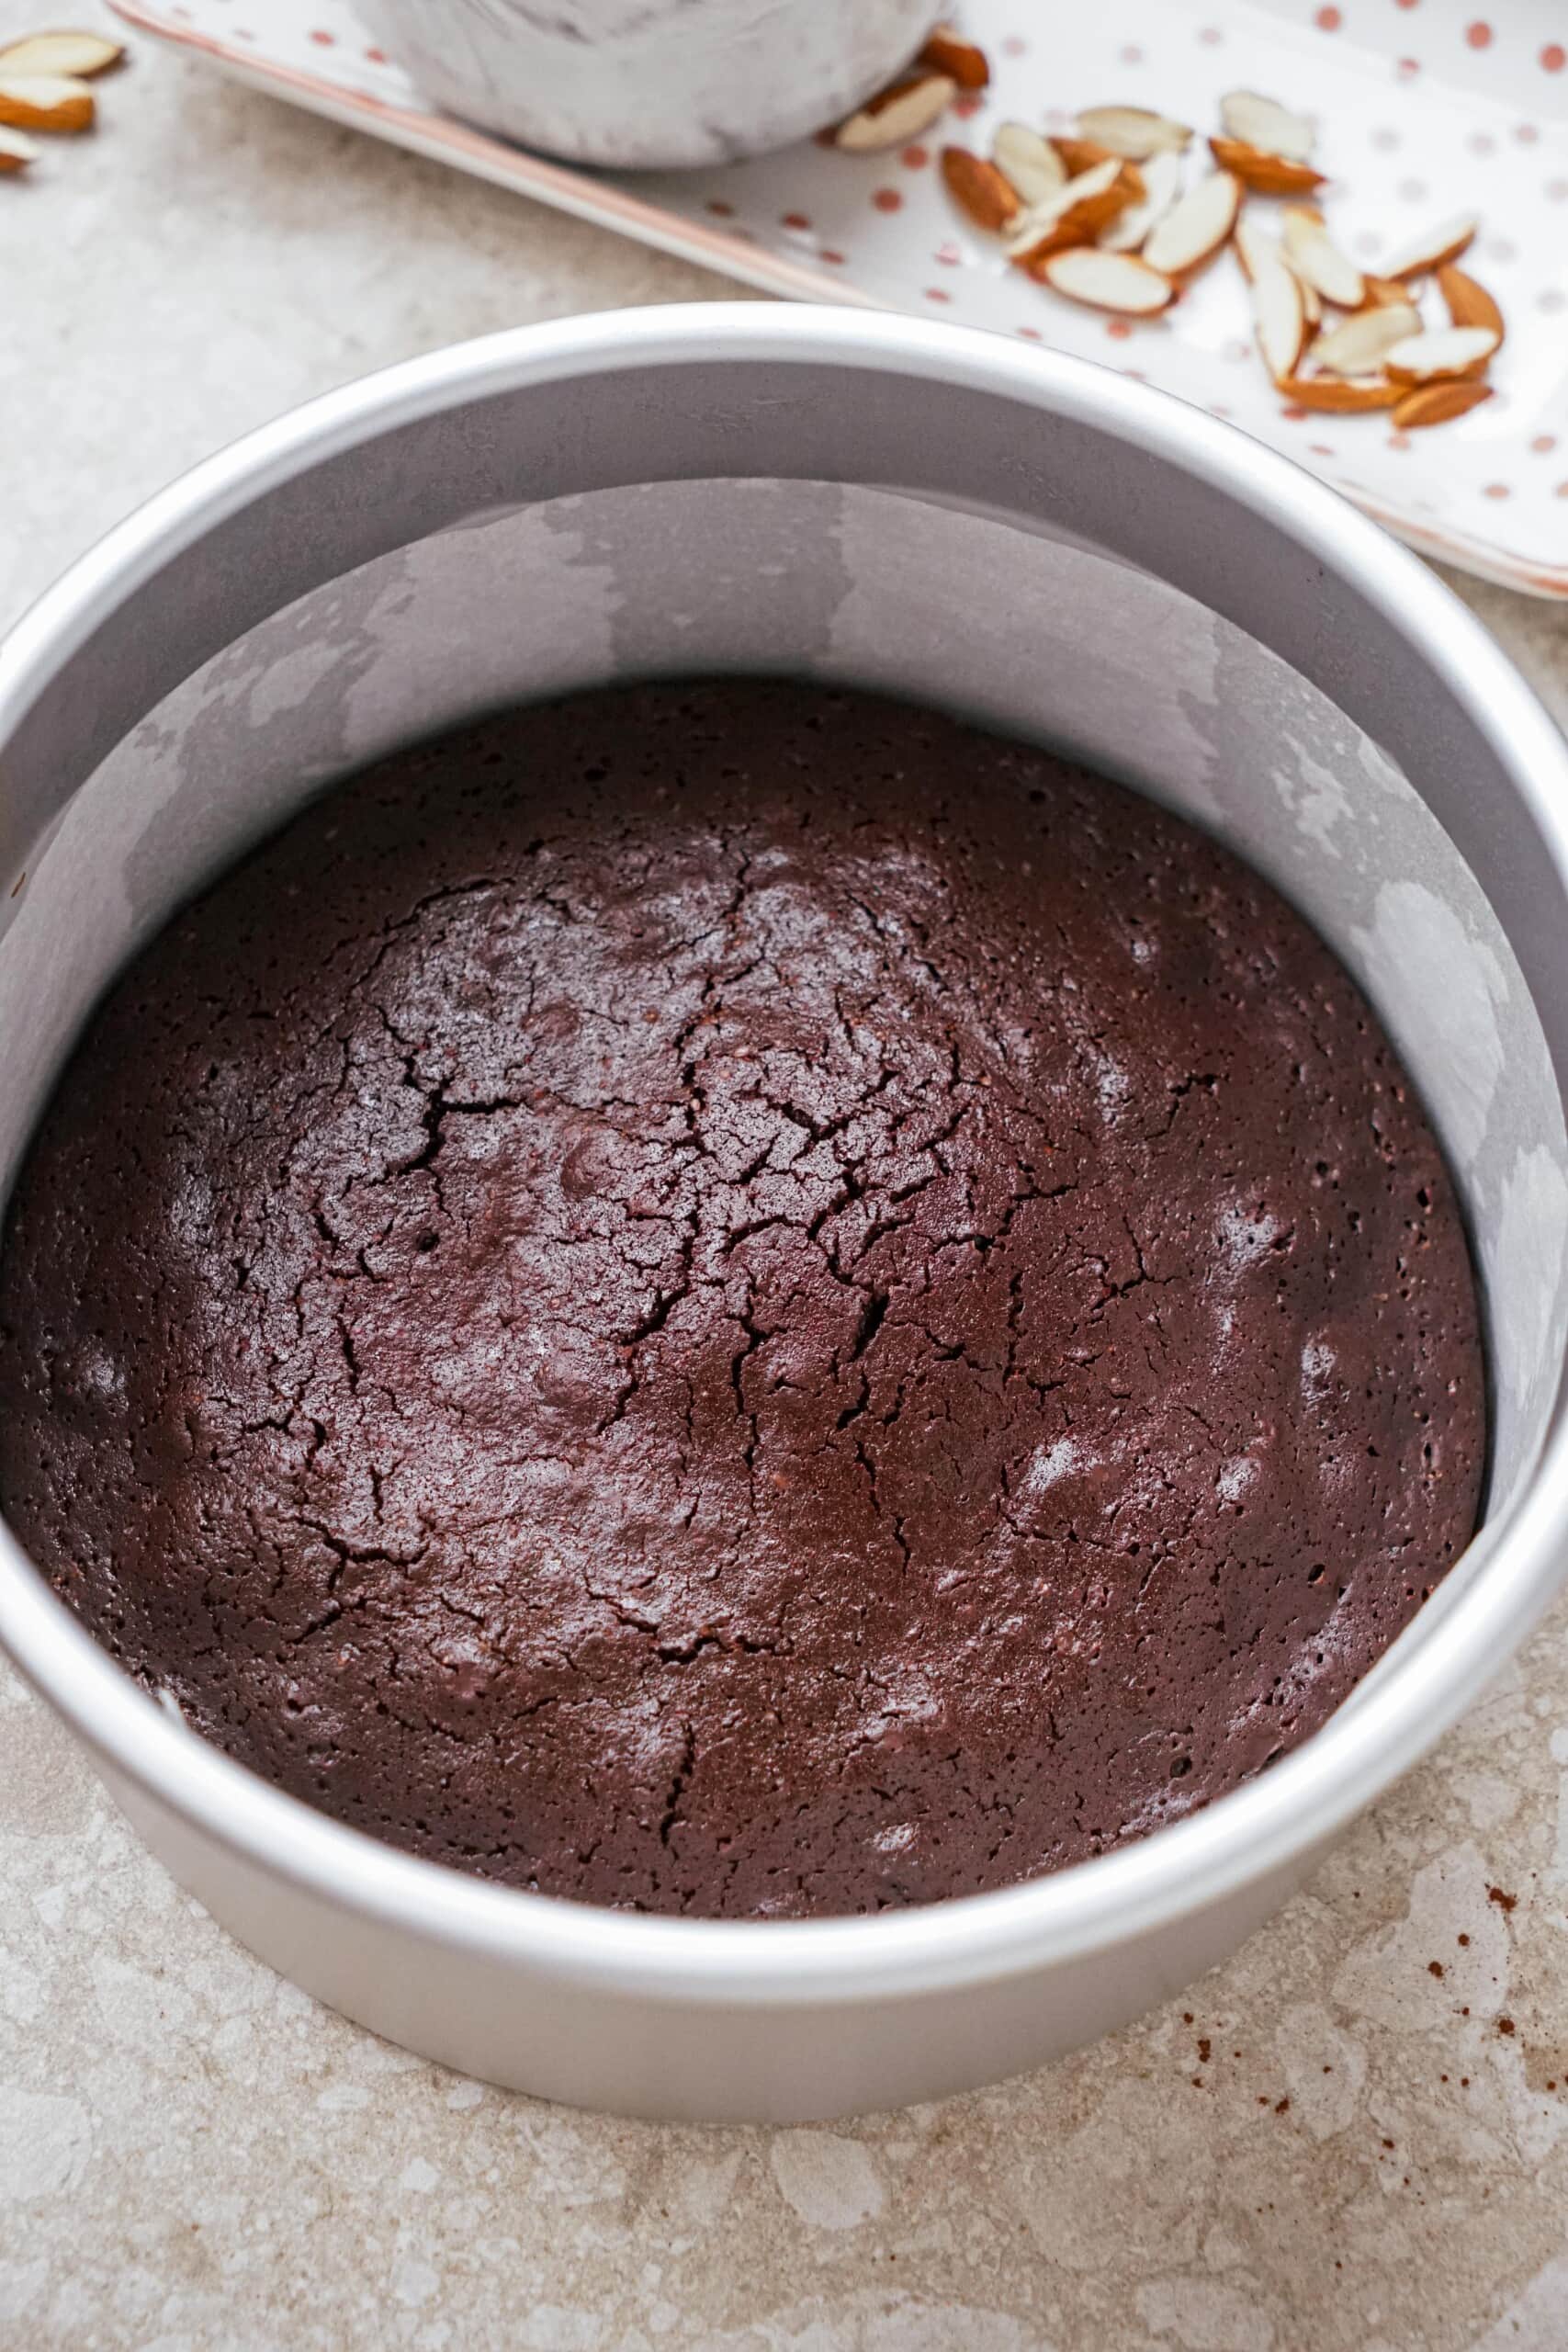 baked chocolate cake in cake pan